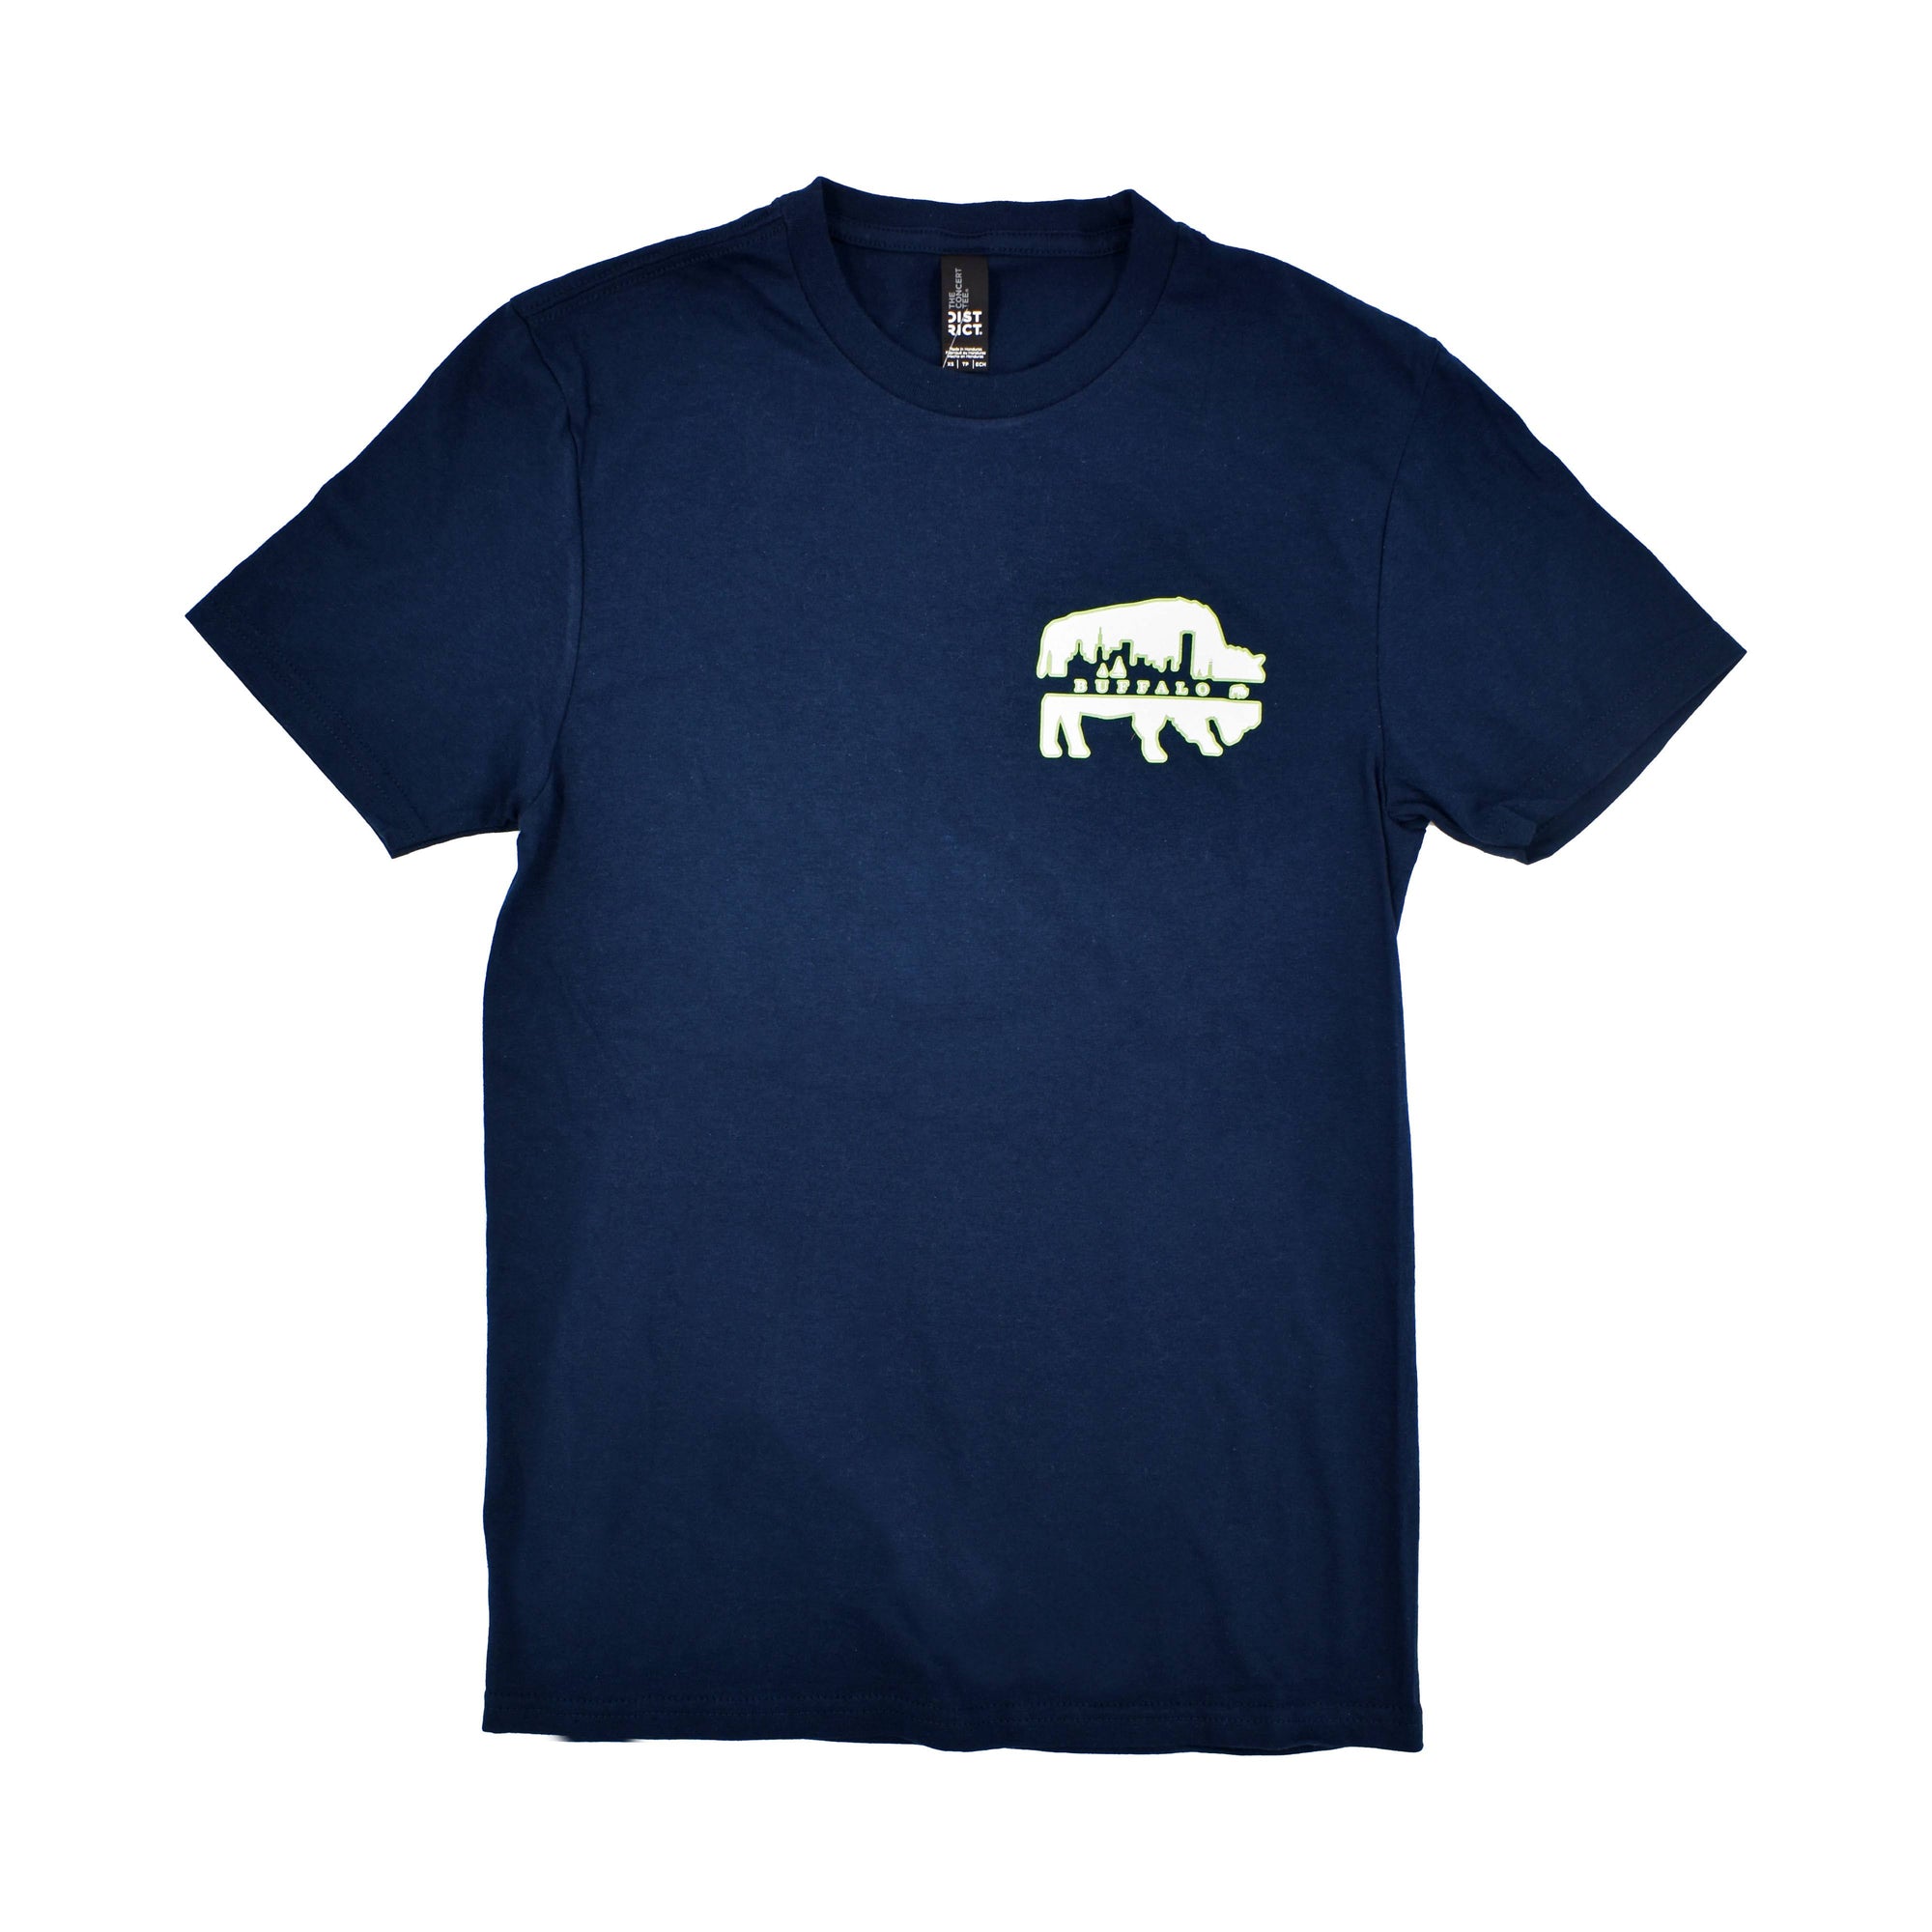 Buffalo BFLO navy blue skyline t shirt with lime green outlined buffalo